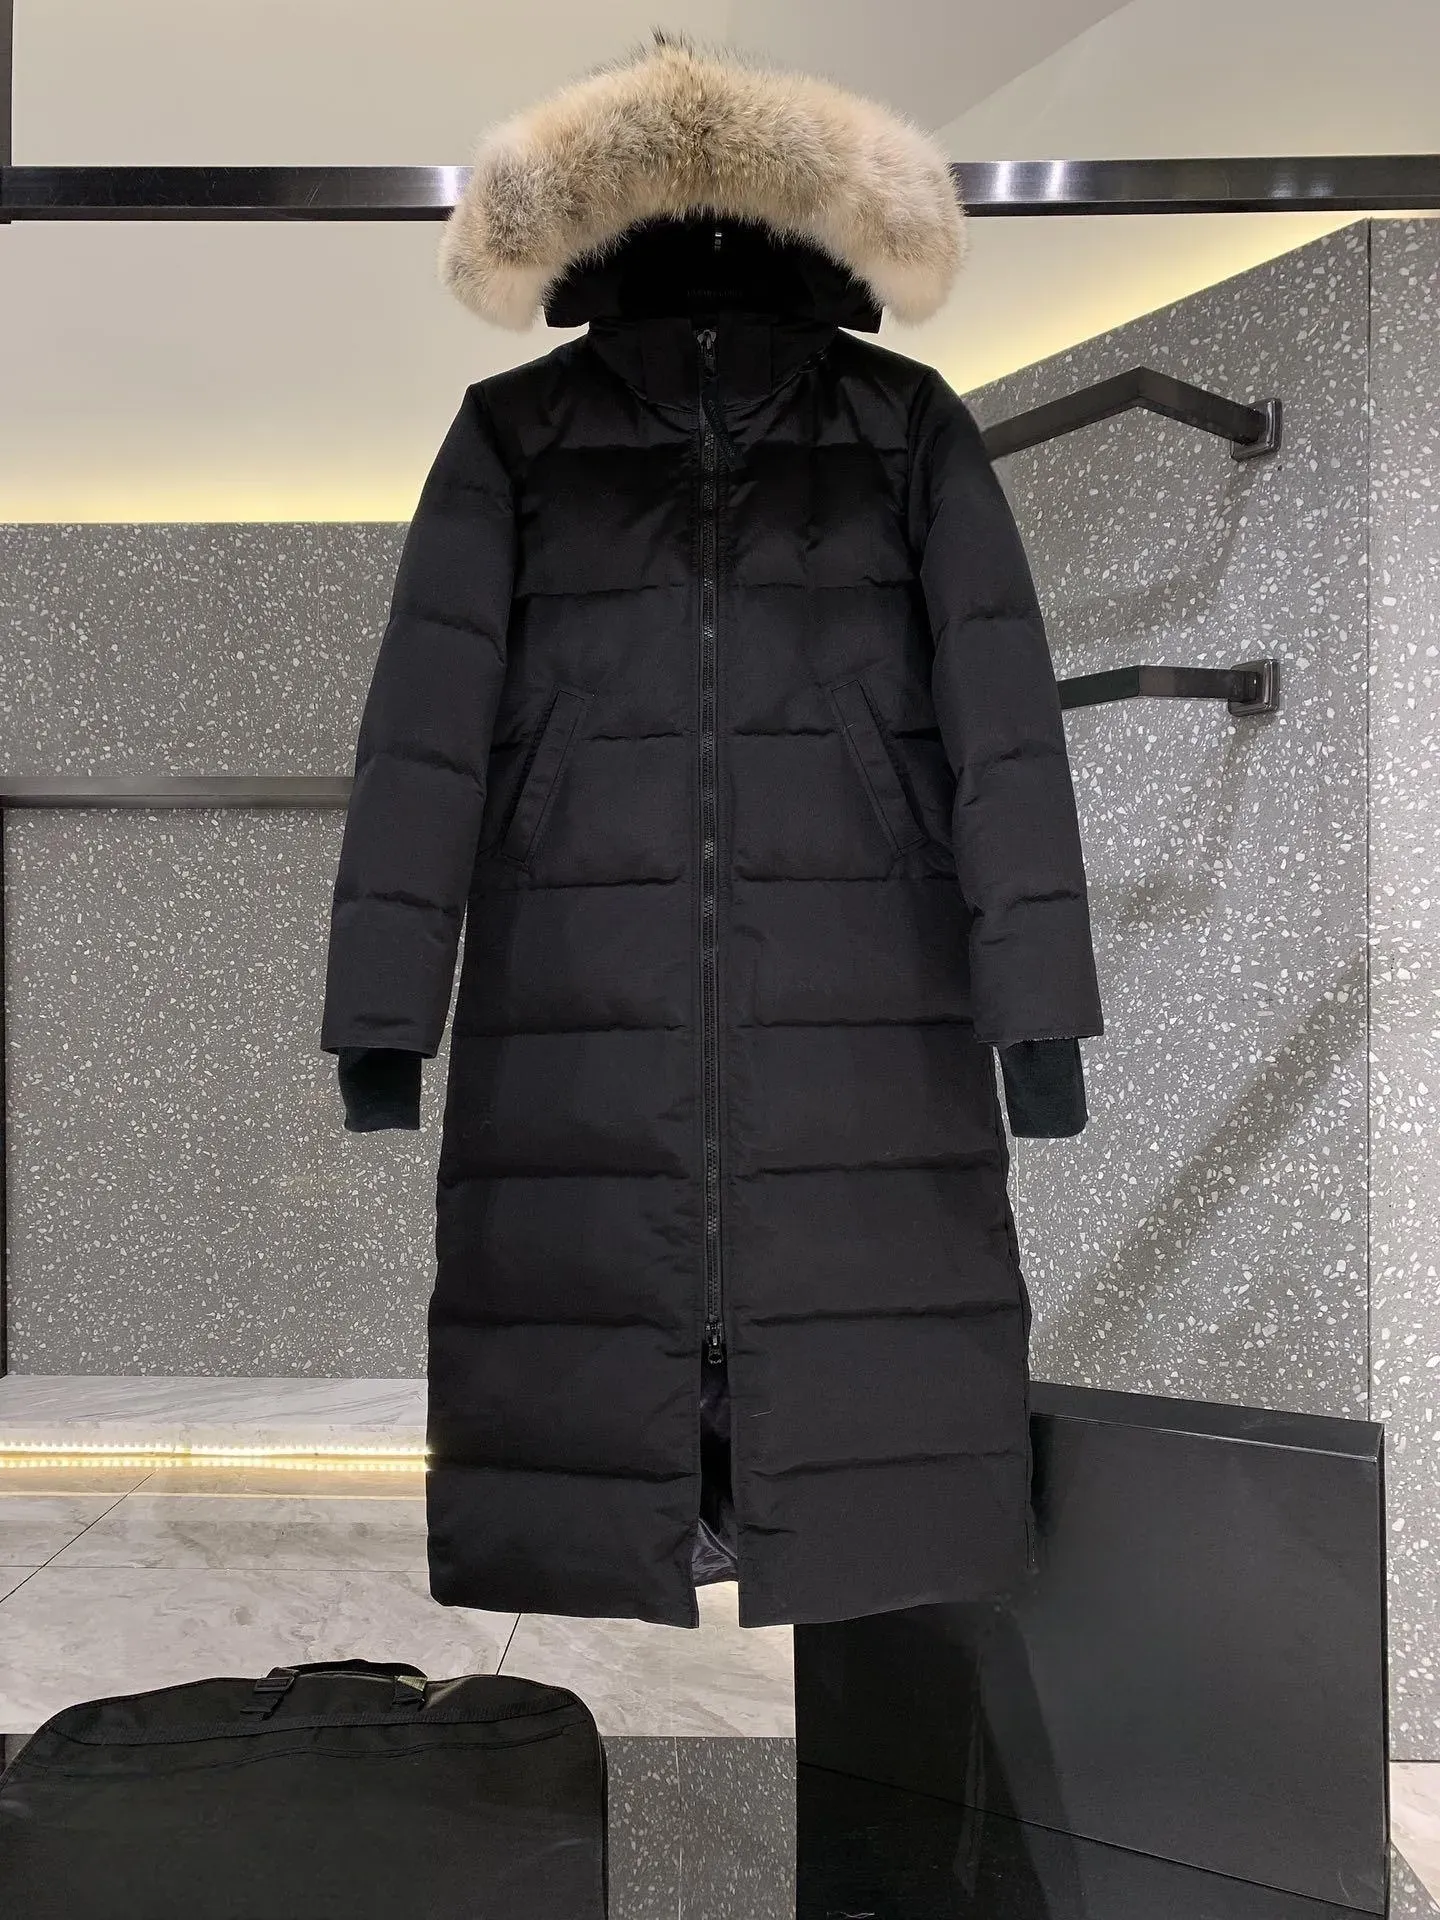 Black jacket women jackets for women down jacket Fashion Brand Long Coat Large Pocket Fur Collar Thermal Top Female Large Windproof Coats thick warm women jackets Z6